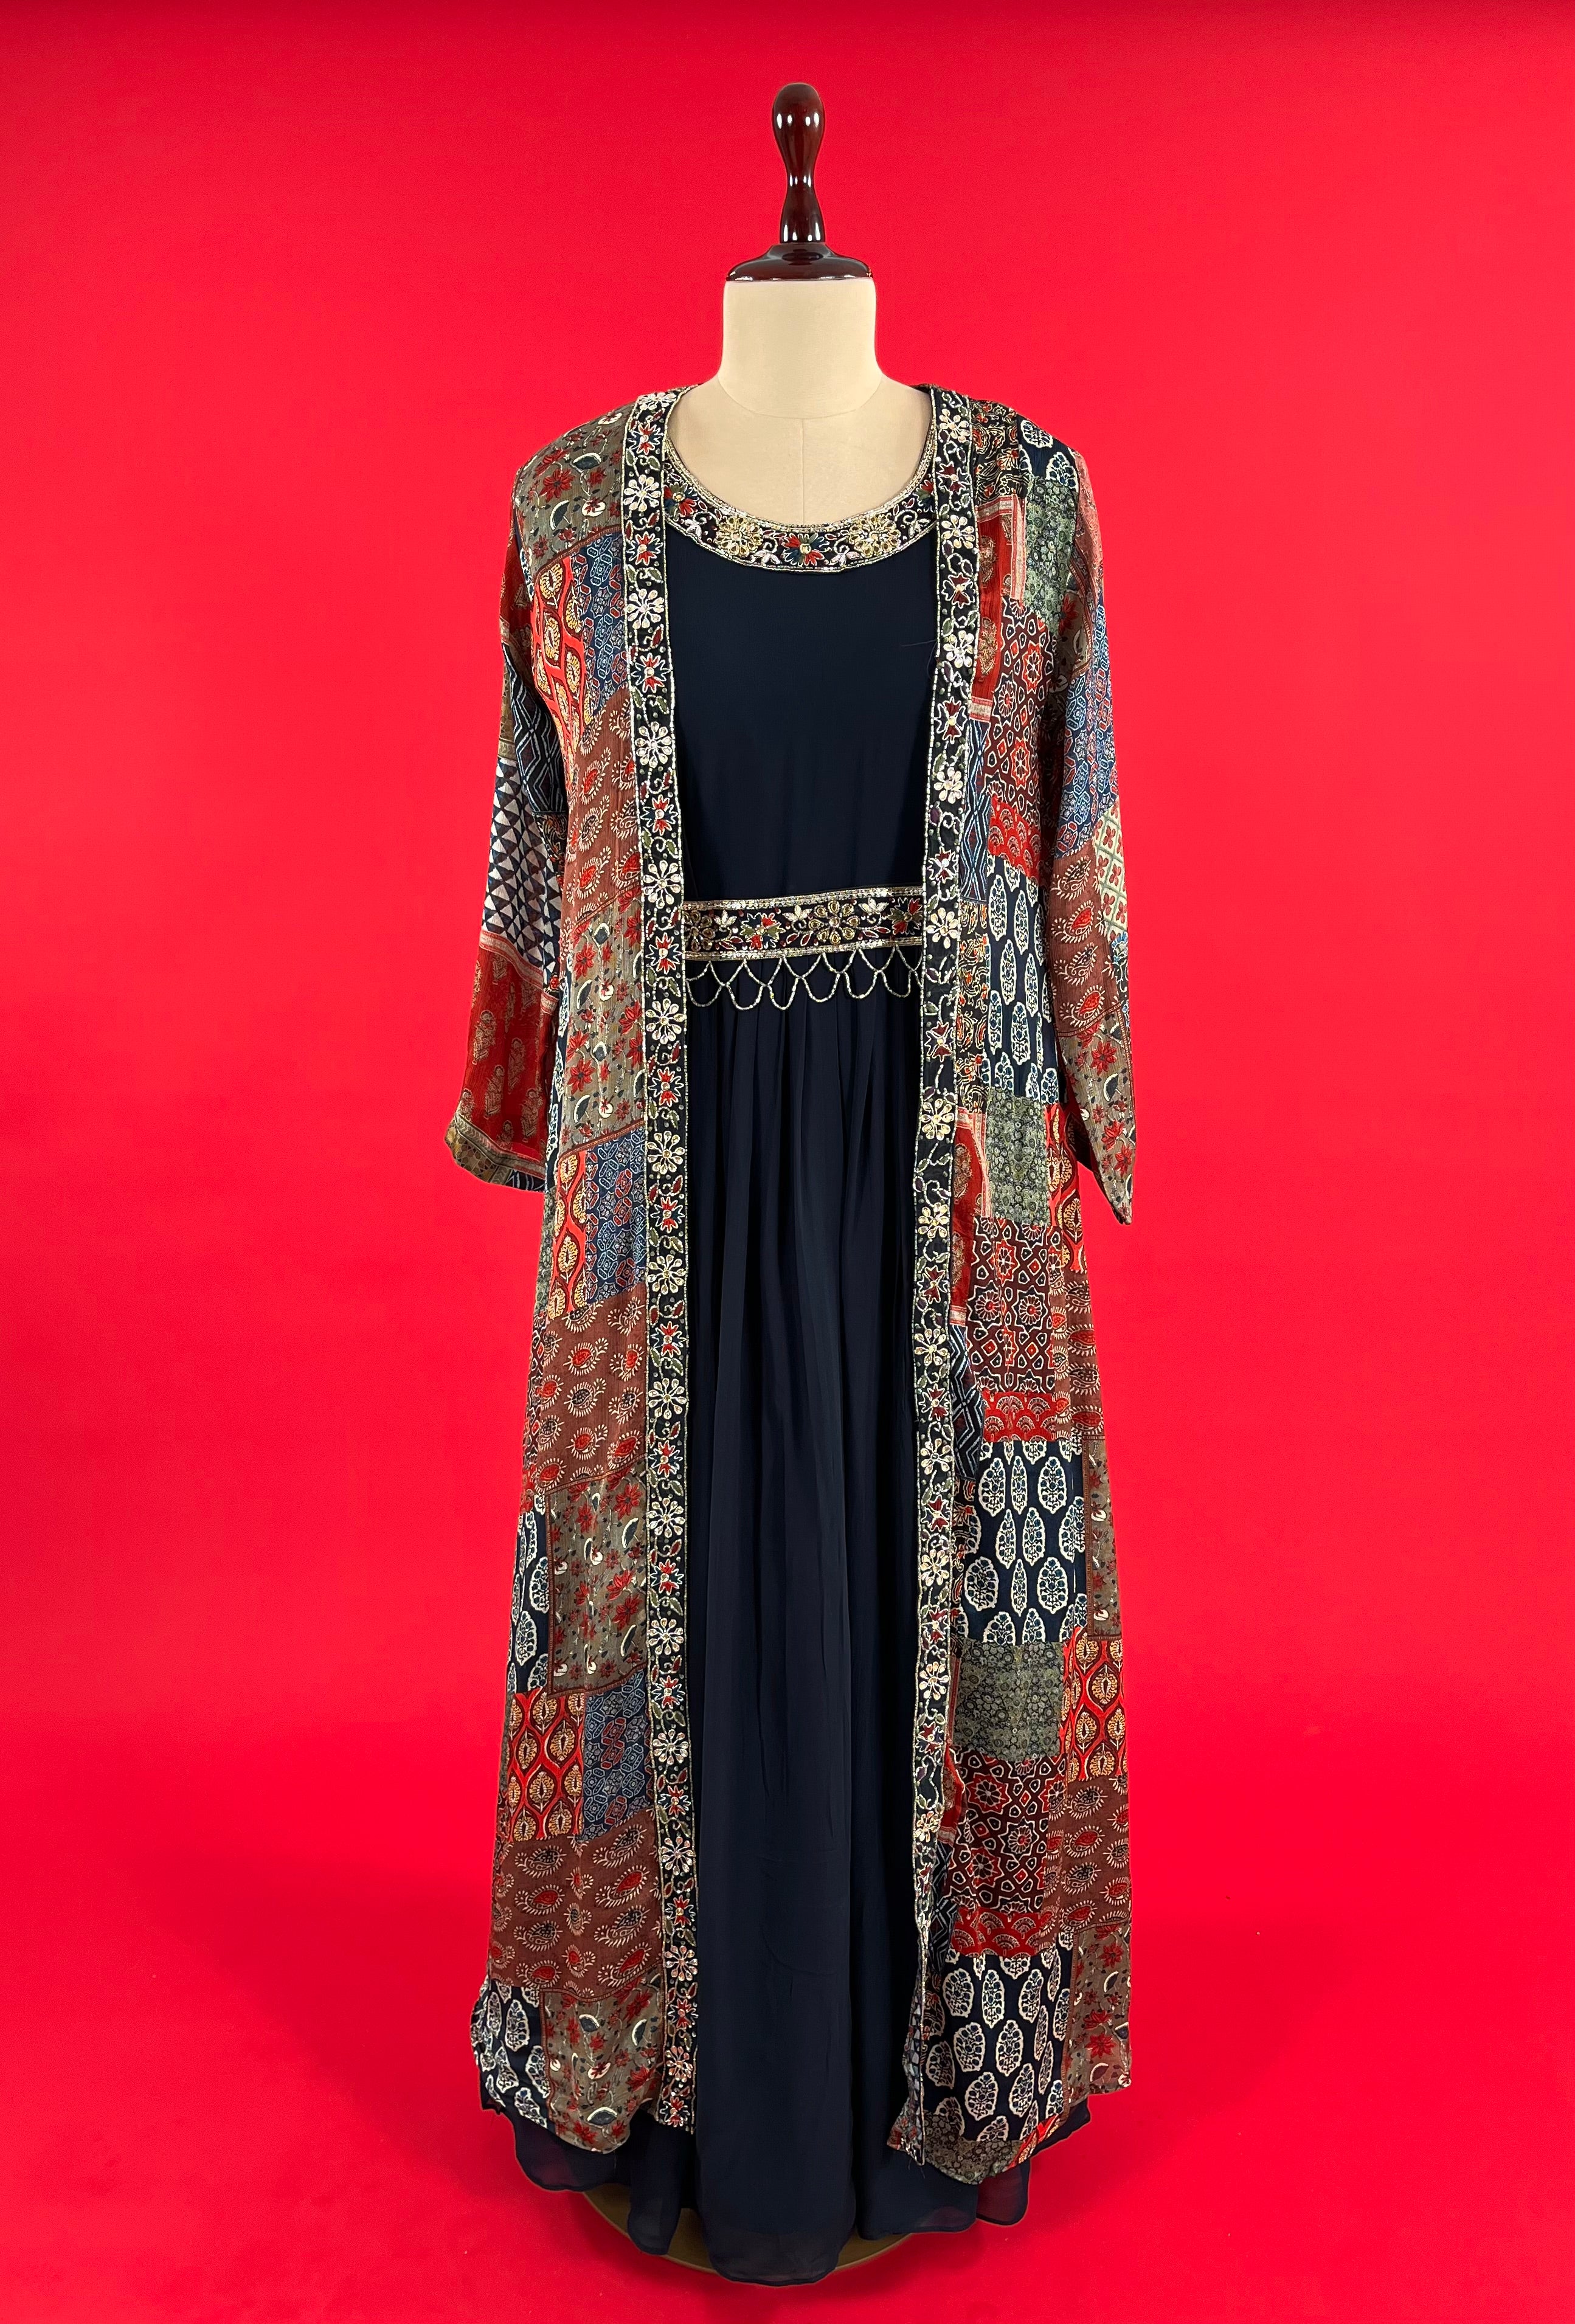 PARTYWEAR SHRUG LEHNGA CHOLI KOTI BLOUSE INDO WESTERN DRESS INDIAN  BOLLYWOOD NEW | eBay